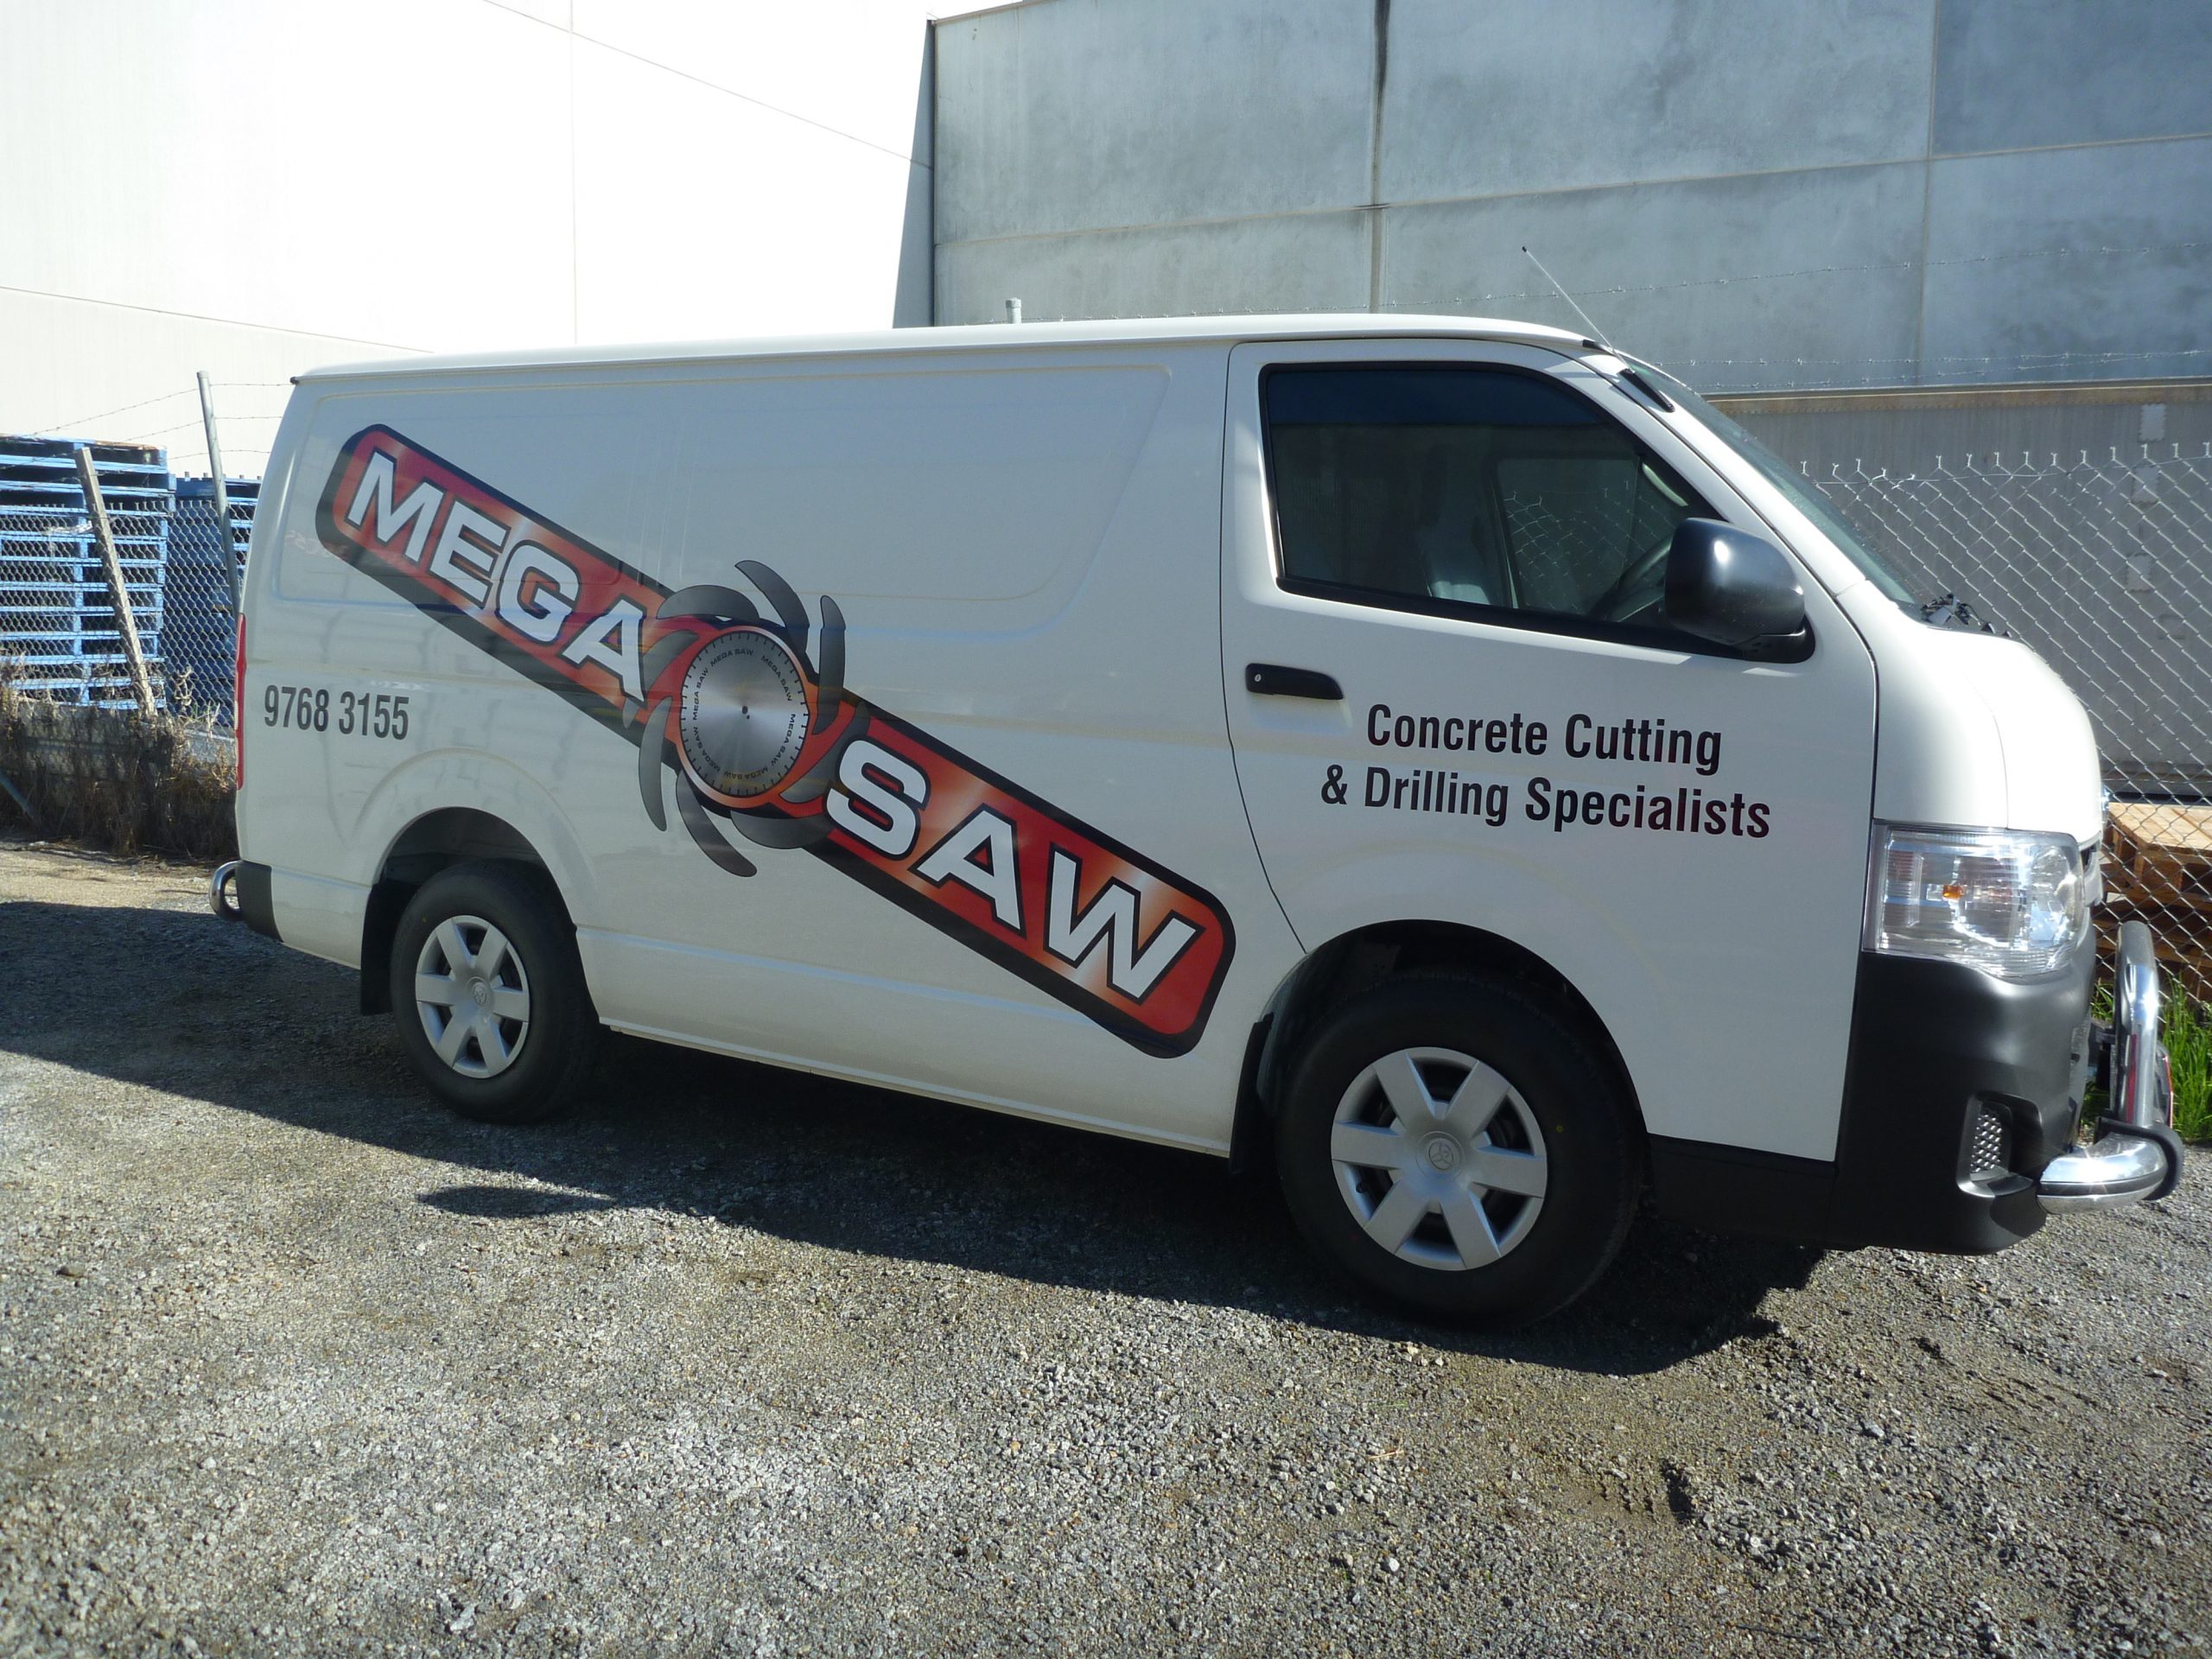 Megasaw Van | #1 Concrete Cutting Company in Melbourne